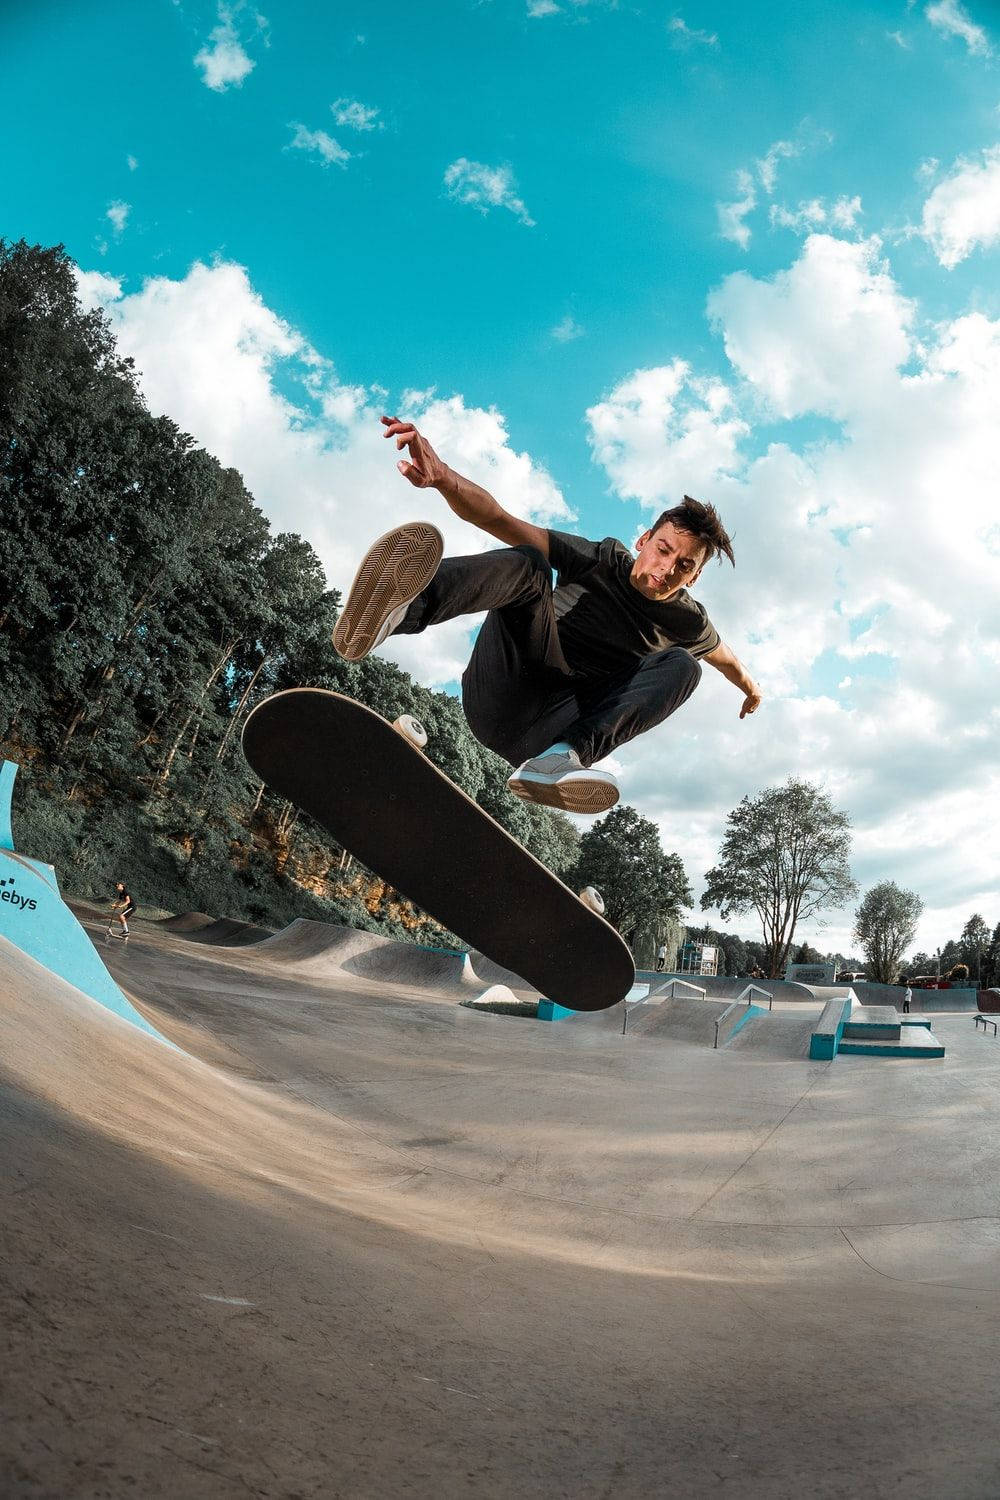 Aesthetic Skateboard Blue Sky Picture